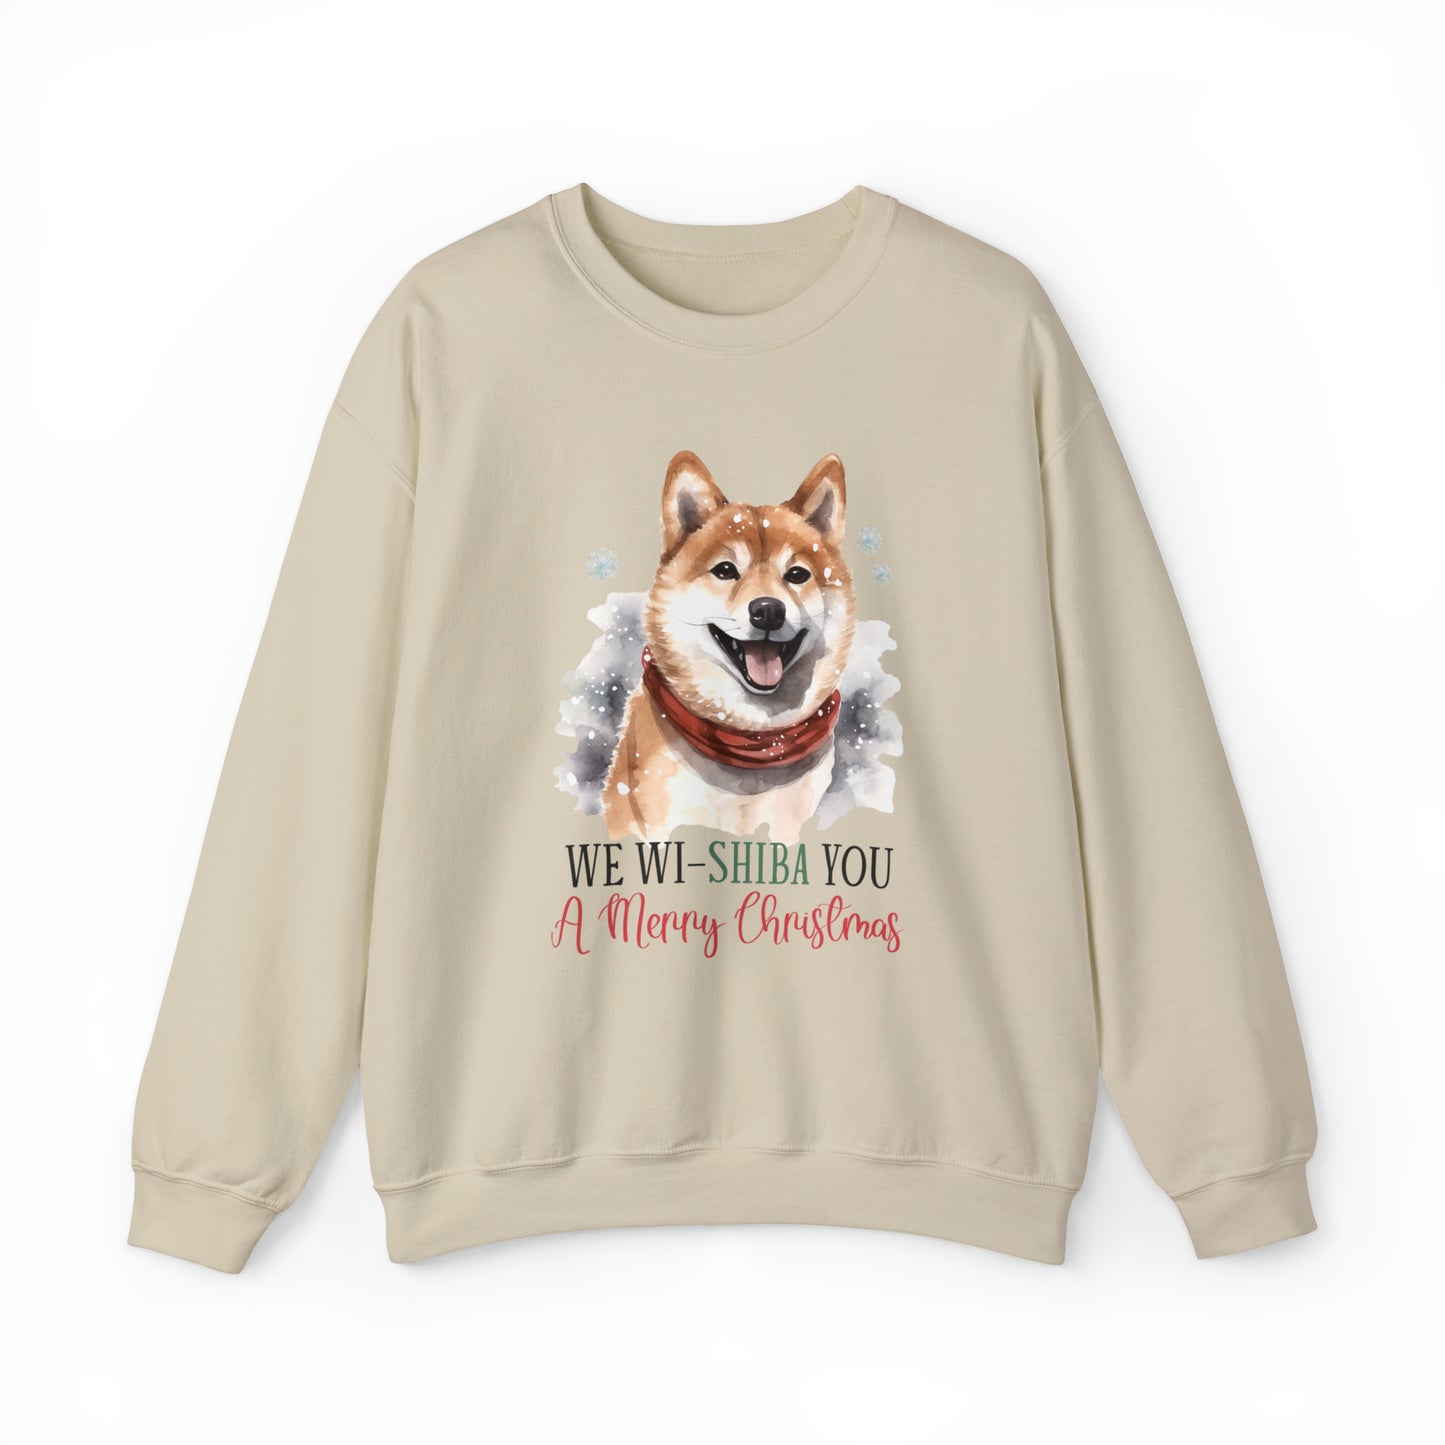 Shiba Inu Dog Christmas Sweatshirt Women's and Men's